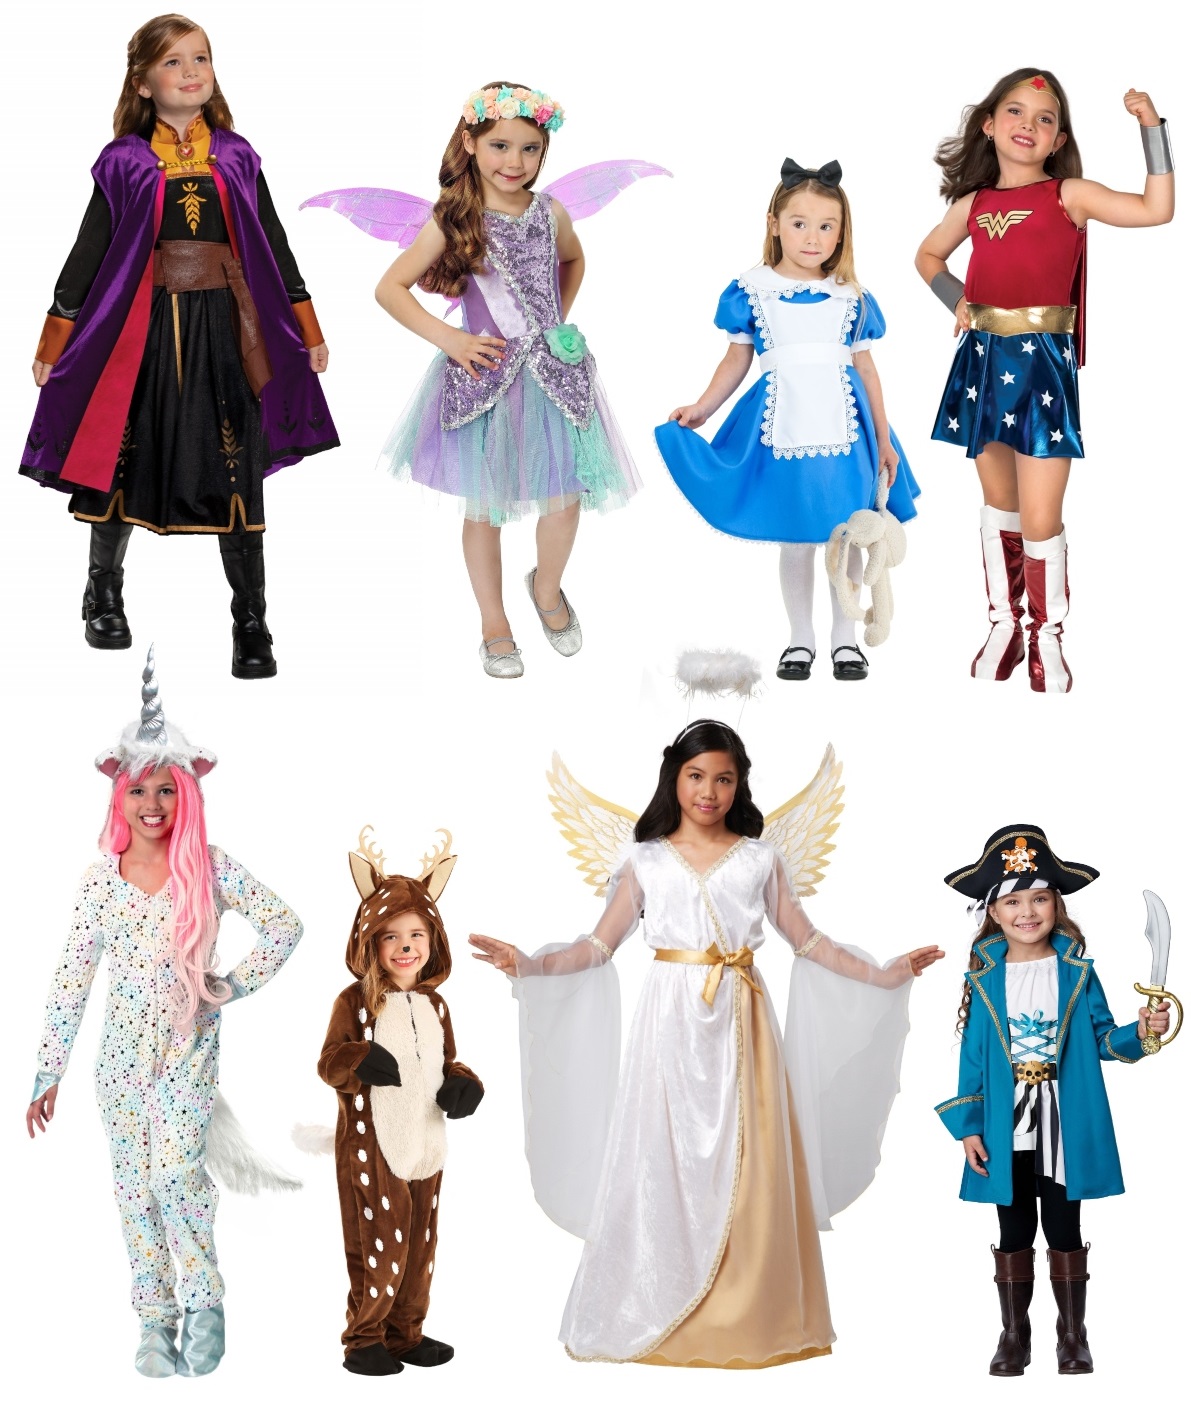 Girls' Costumes for Purim